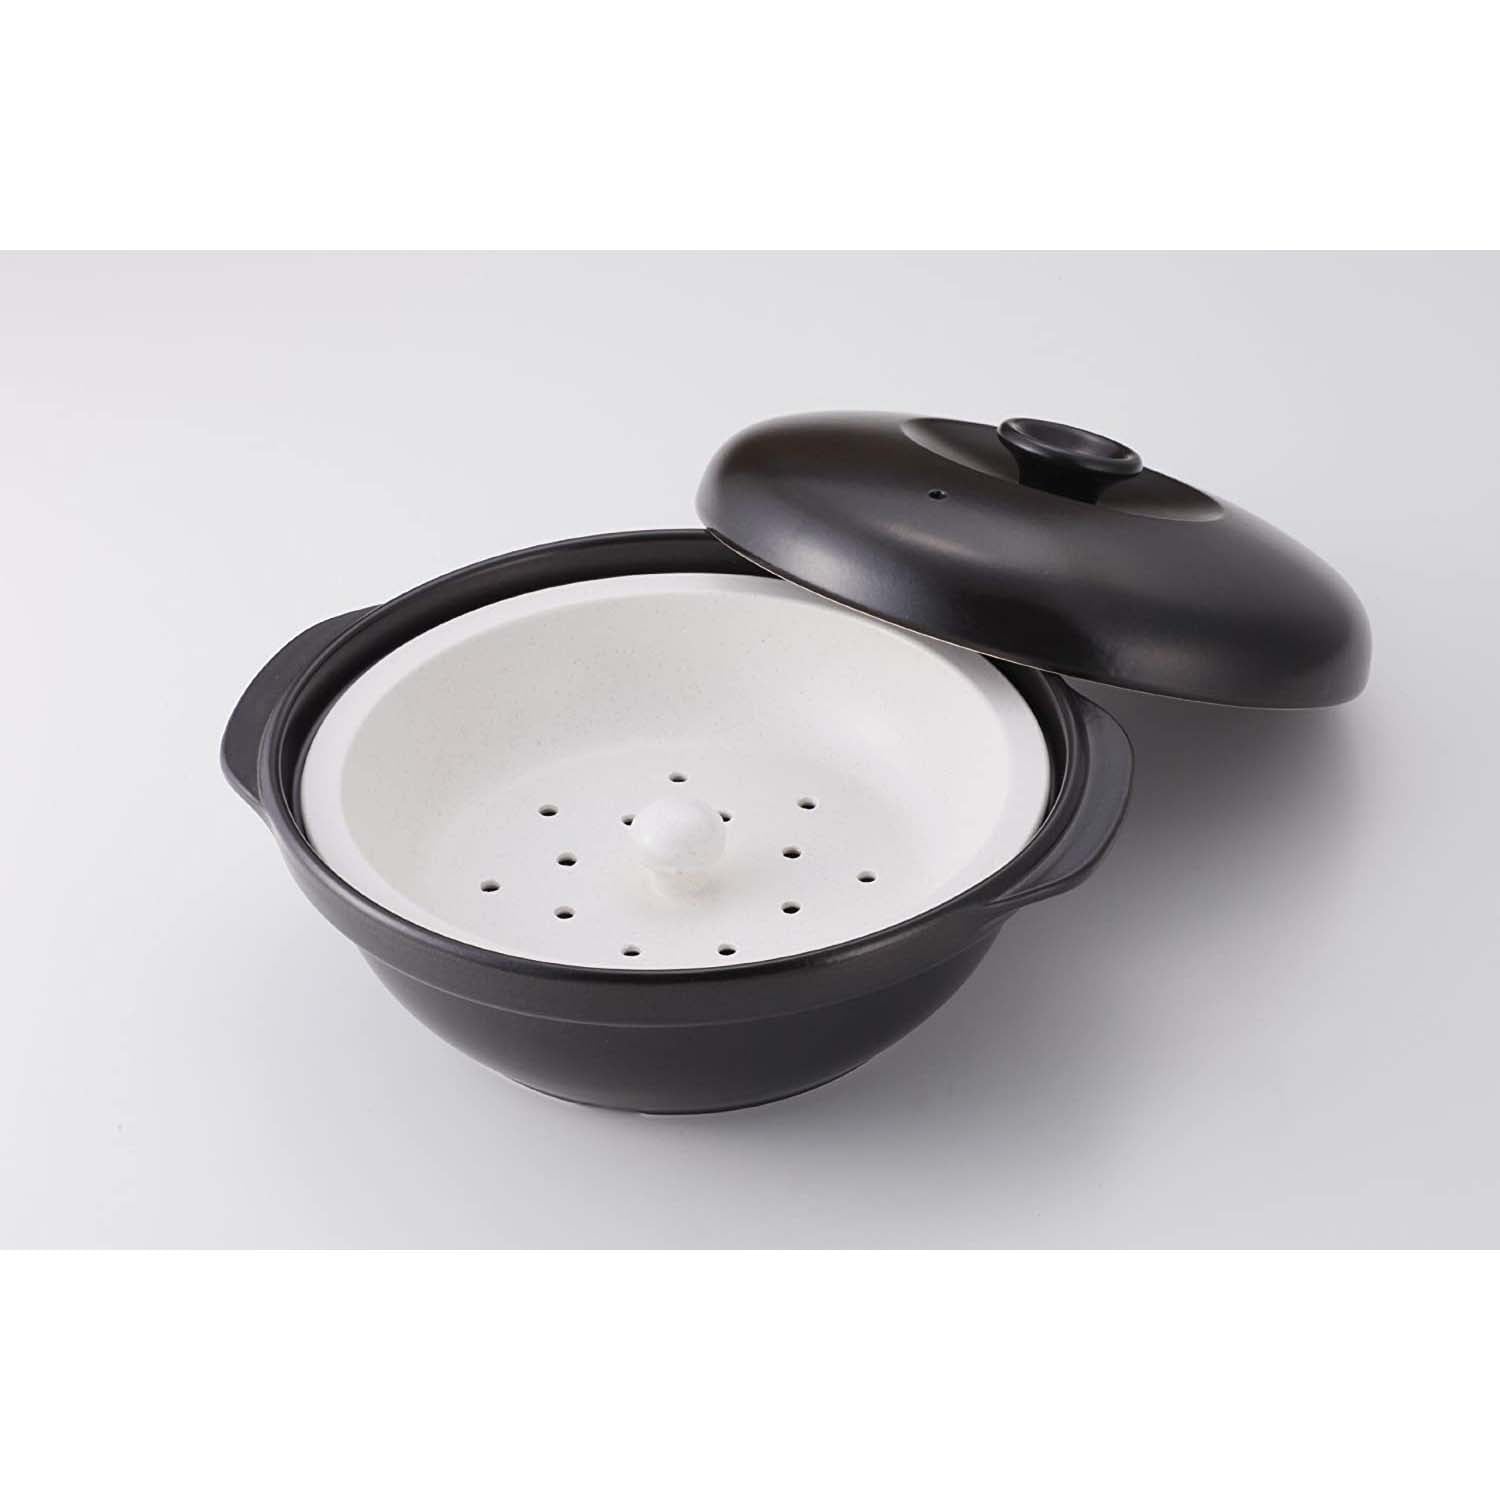 Tohi Ceramics 28Cm Japanese Ceramic Casserole Pot with Steamer Insert